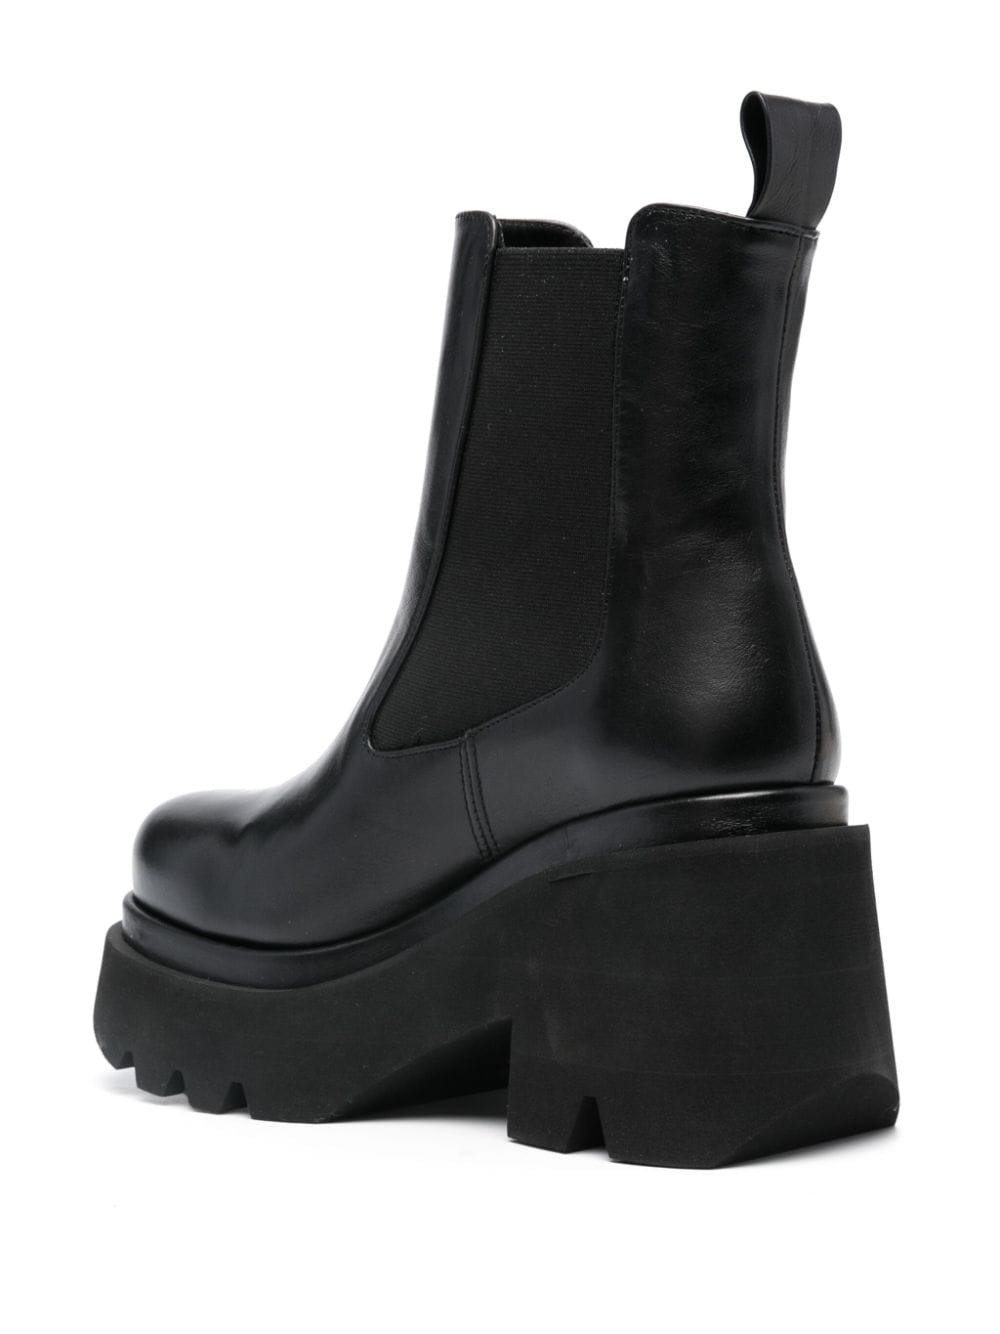 Paloma barcelo' PALOMA BARCELO'- Leather Heel Ankle Boots